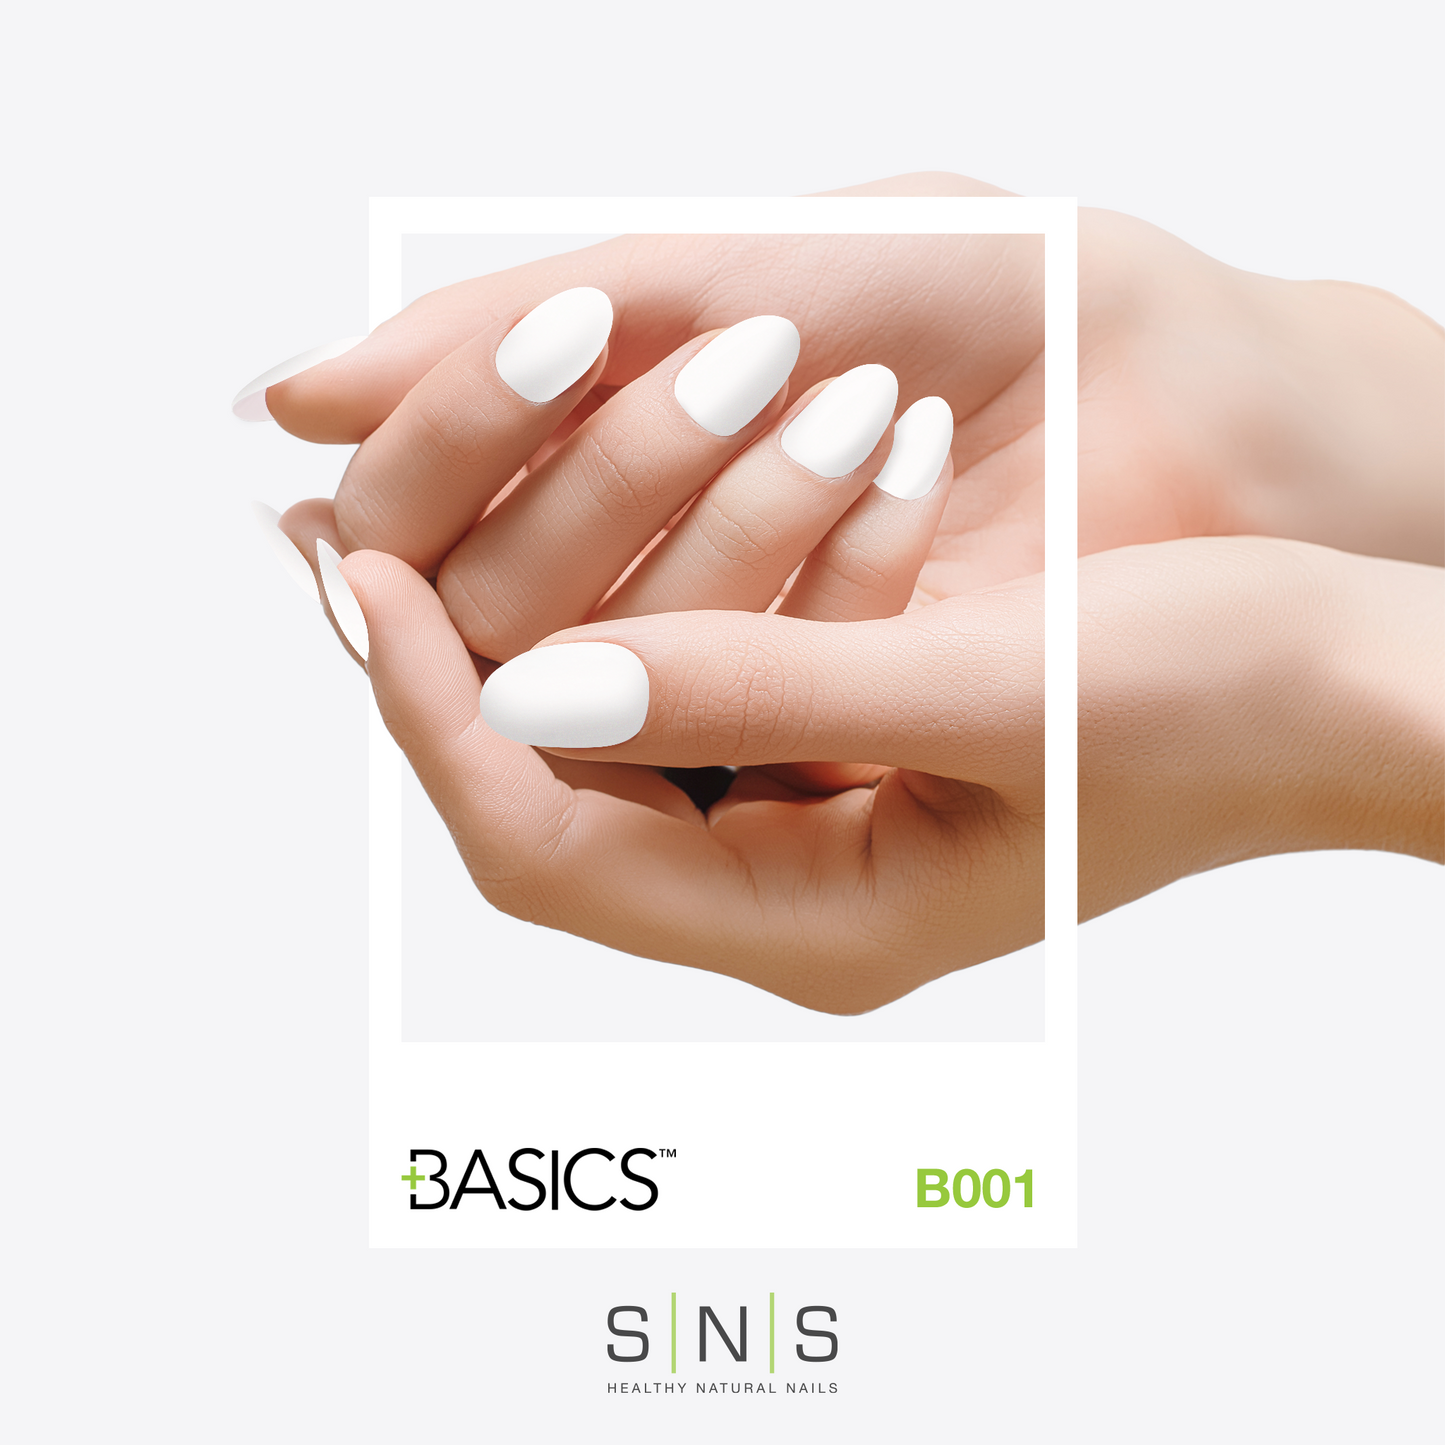 SNS Basics Dip Powder & Acrylic: B001